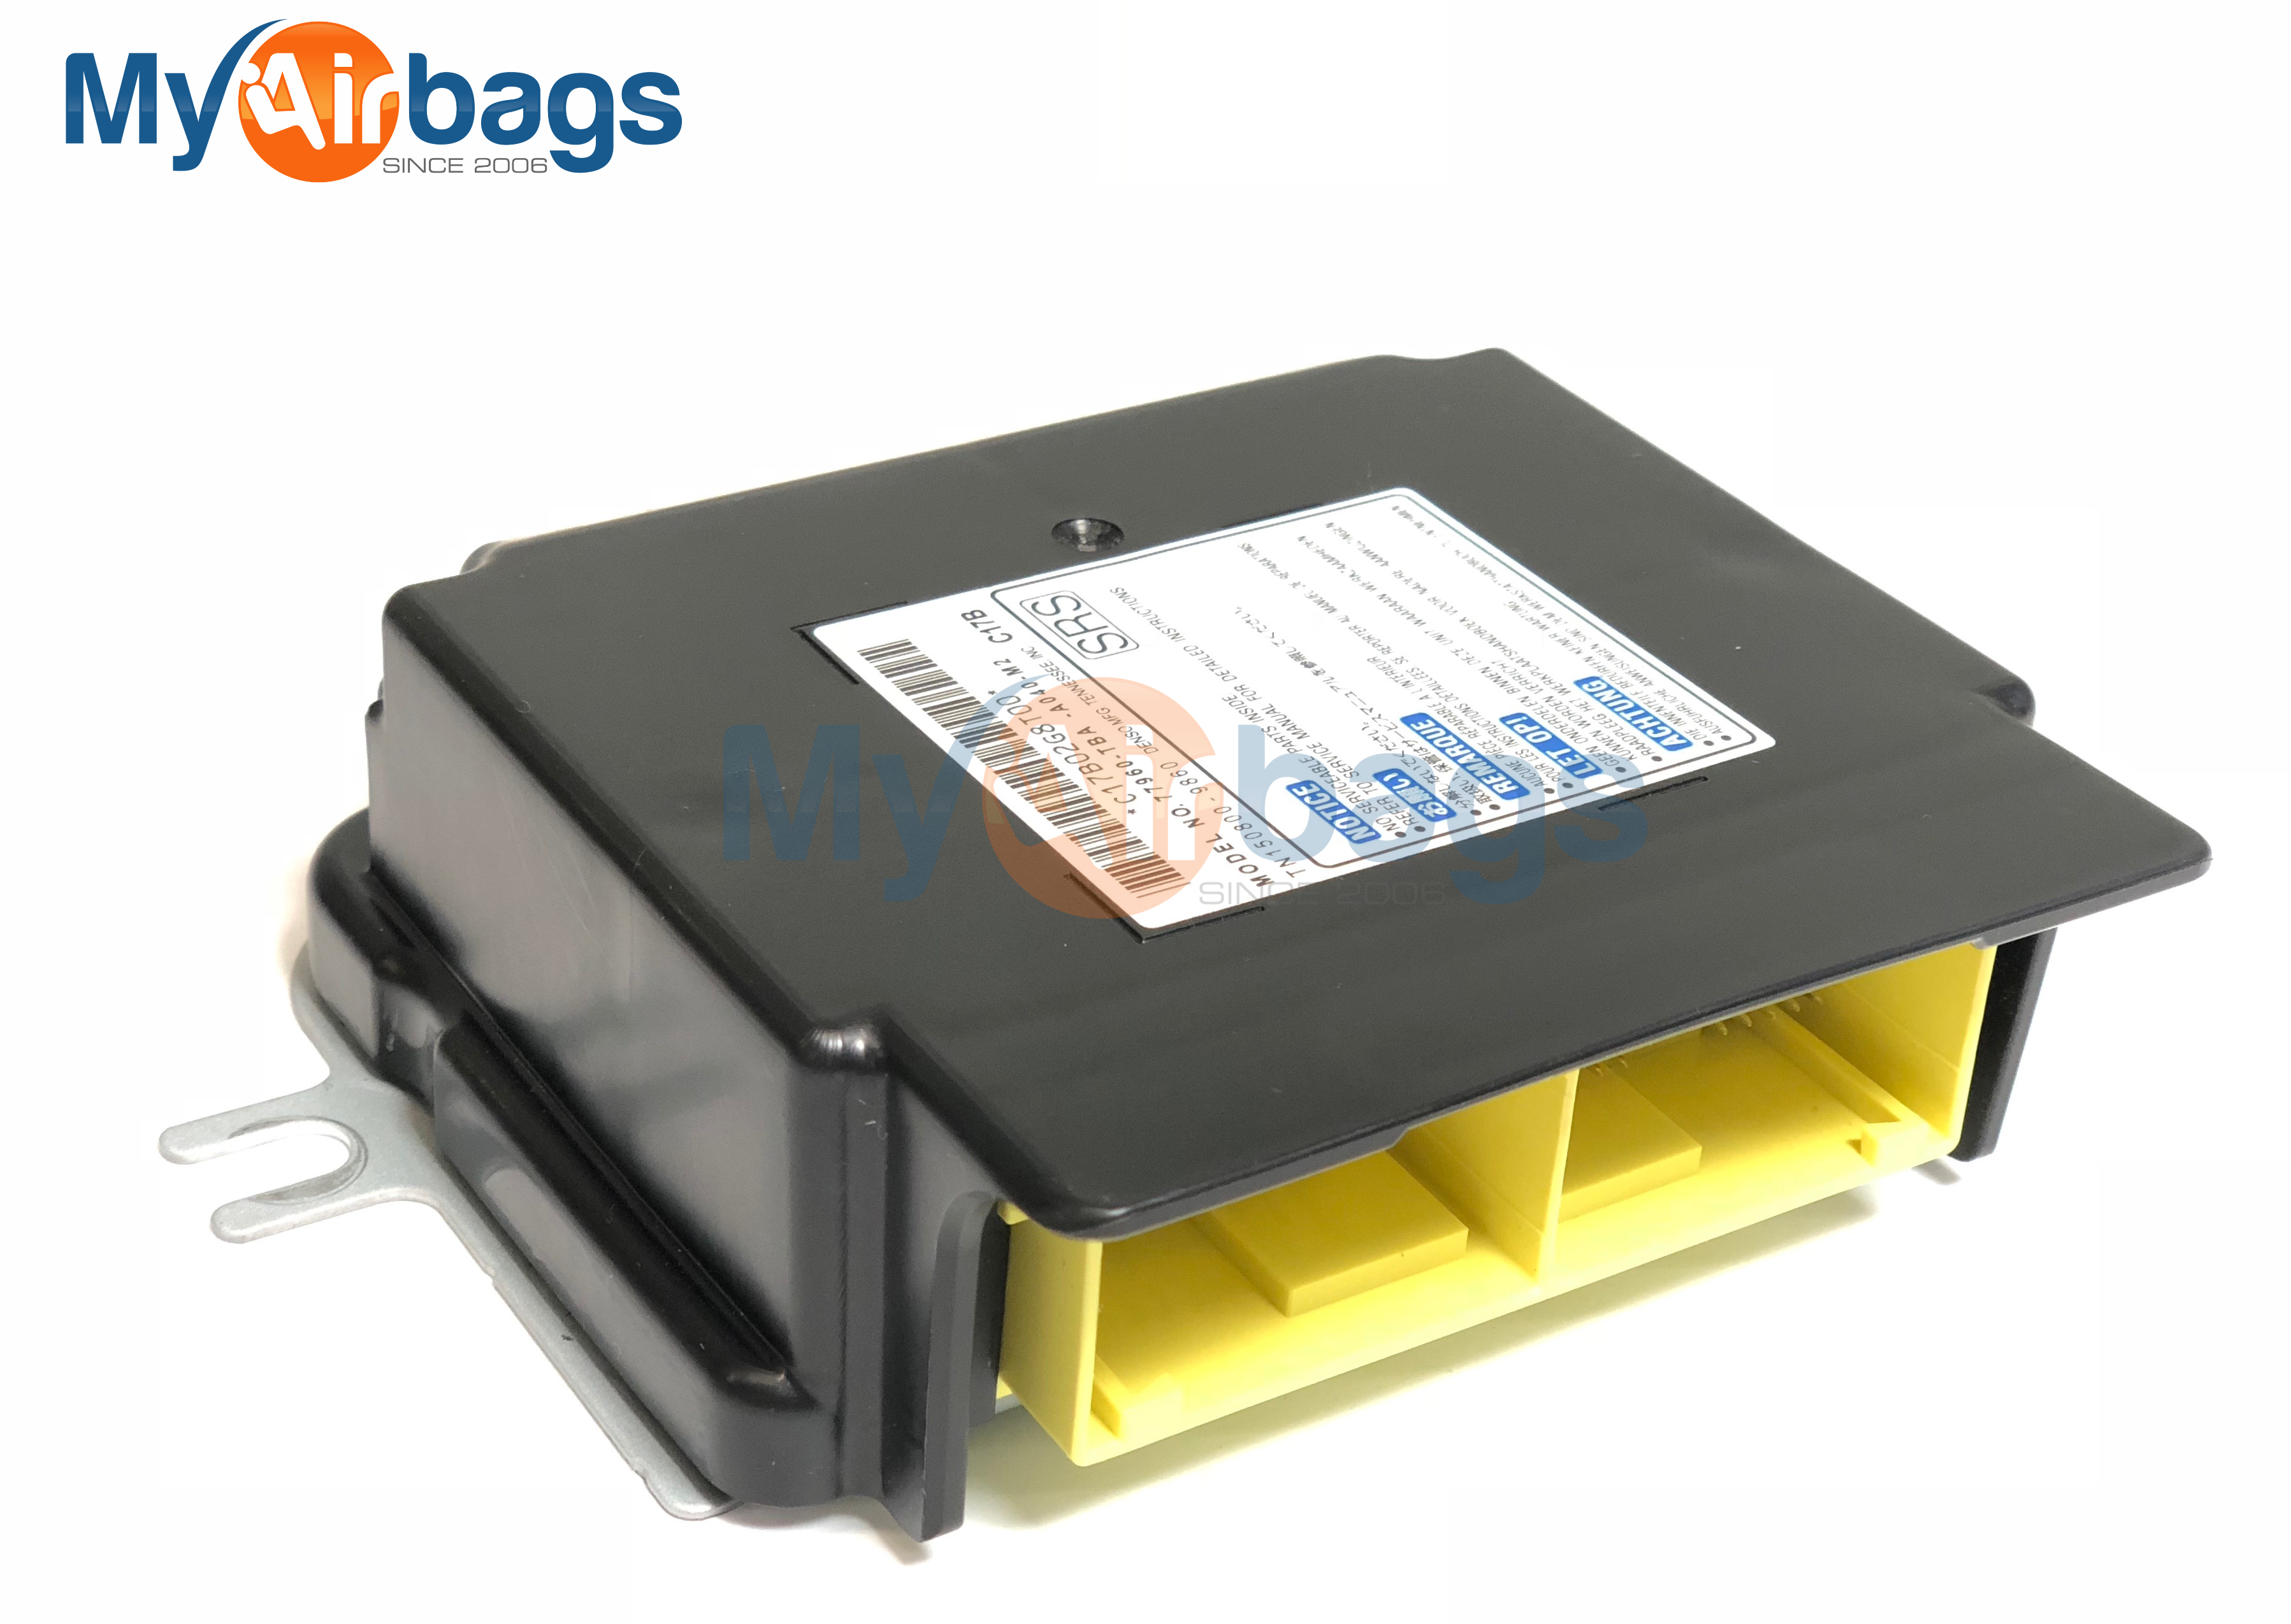 HONDA CIVIC SRS Airbag Computer Diagnostic Control Module PART #77960TBAA040M2